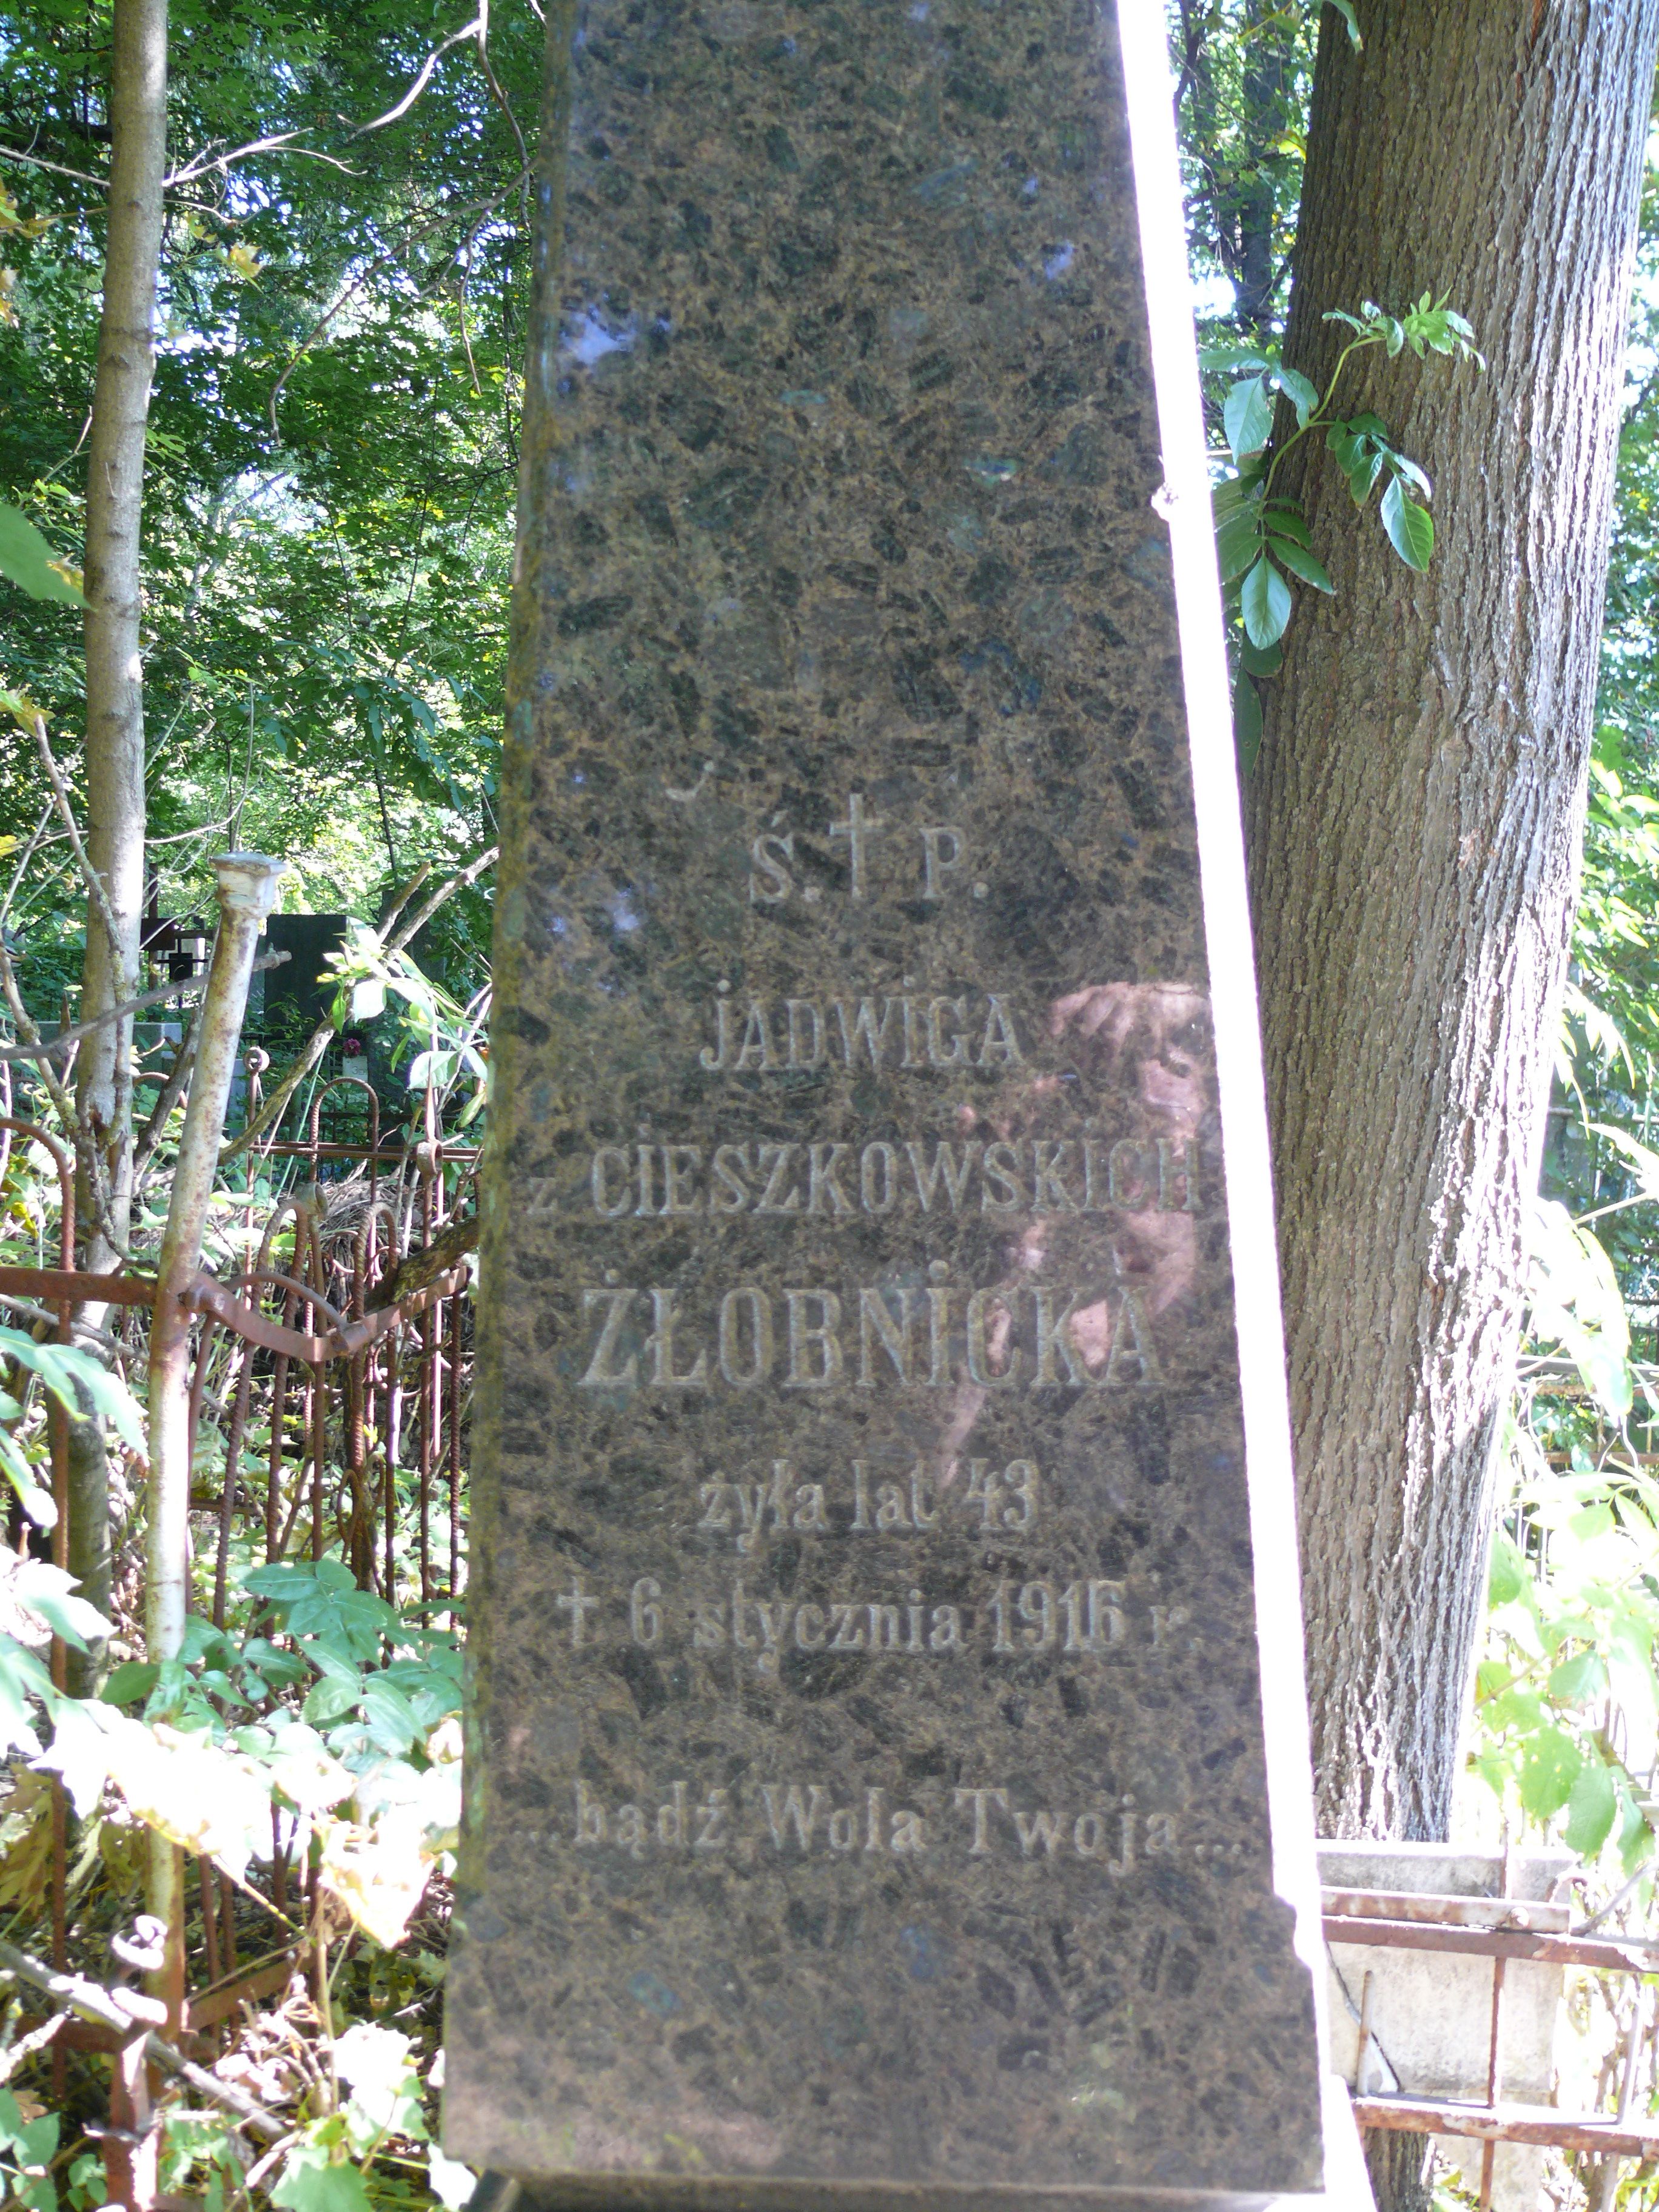 Tombstone of Jadwiga Żłobnicka